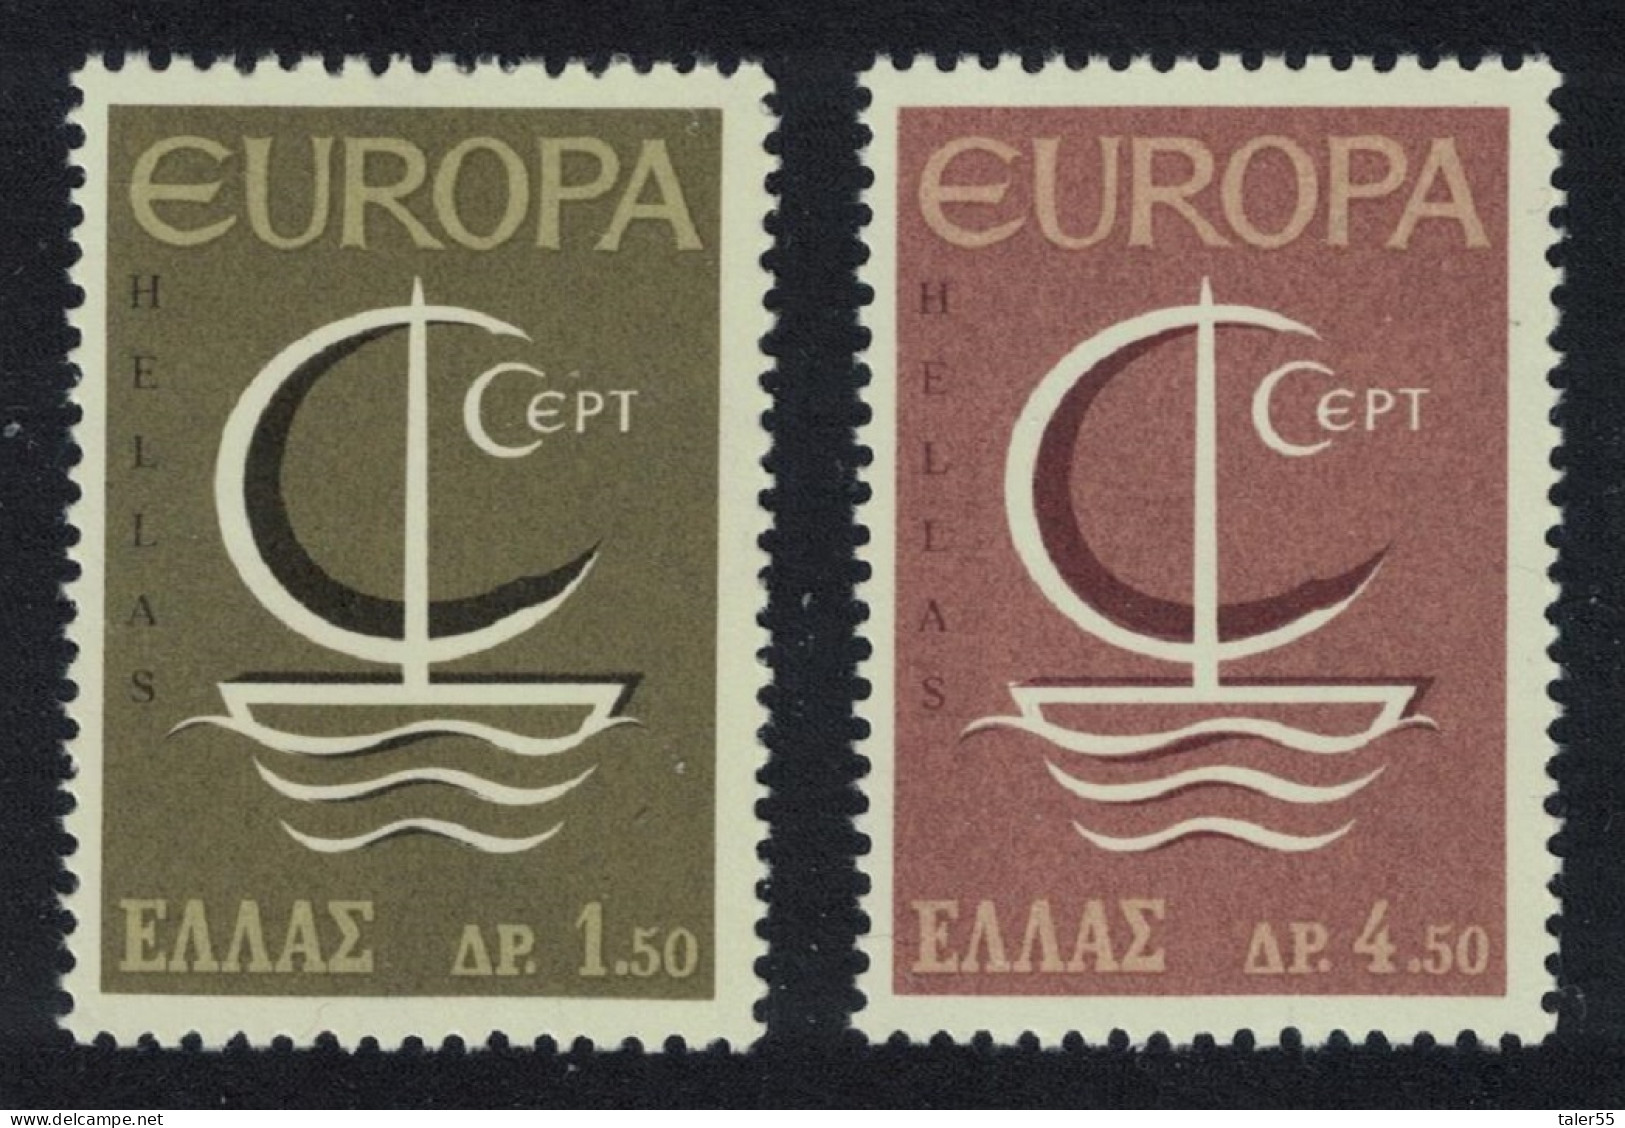 Greece Symbolic Ship Europa 2v 1966 MNH SG#1021-1022 MI#919-920 Sc#862-863 - Ungebraucht